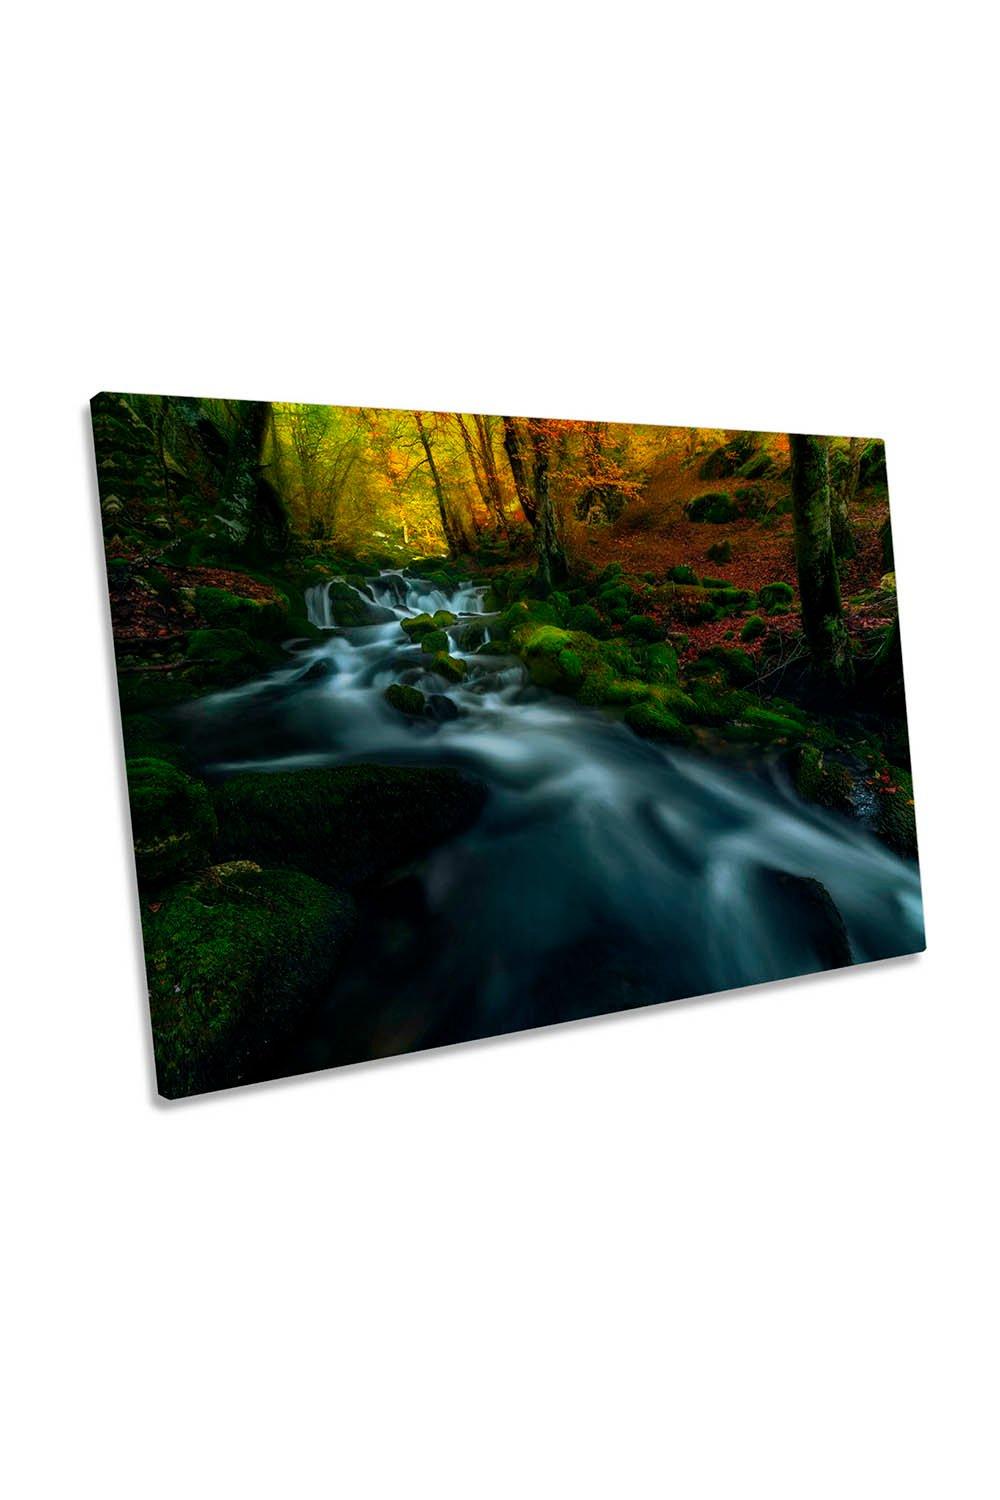 Past Seasons River Forest Landscape Canvas Wall Art Picture Print